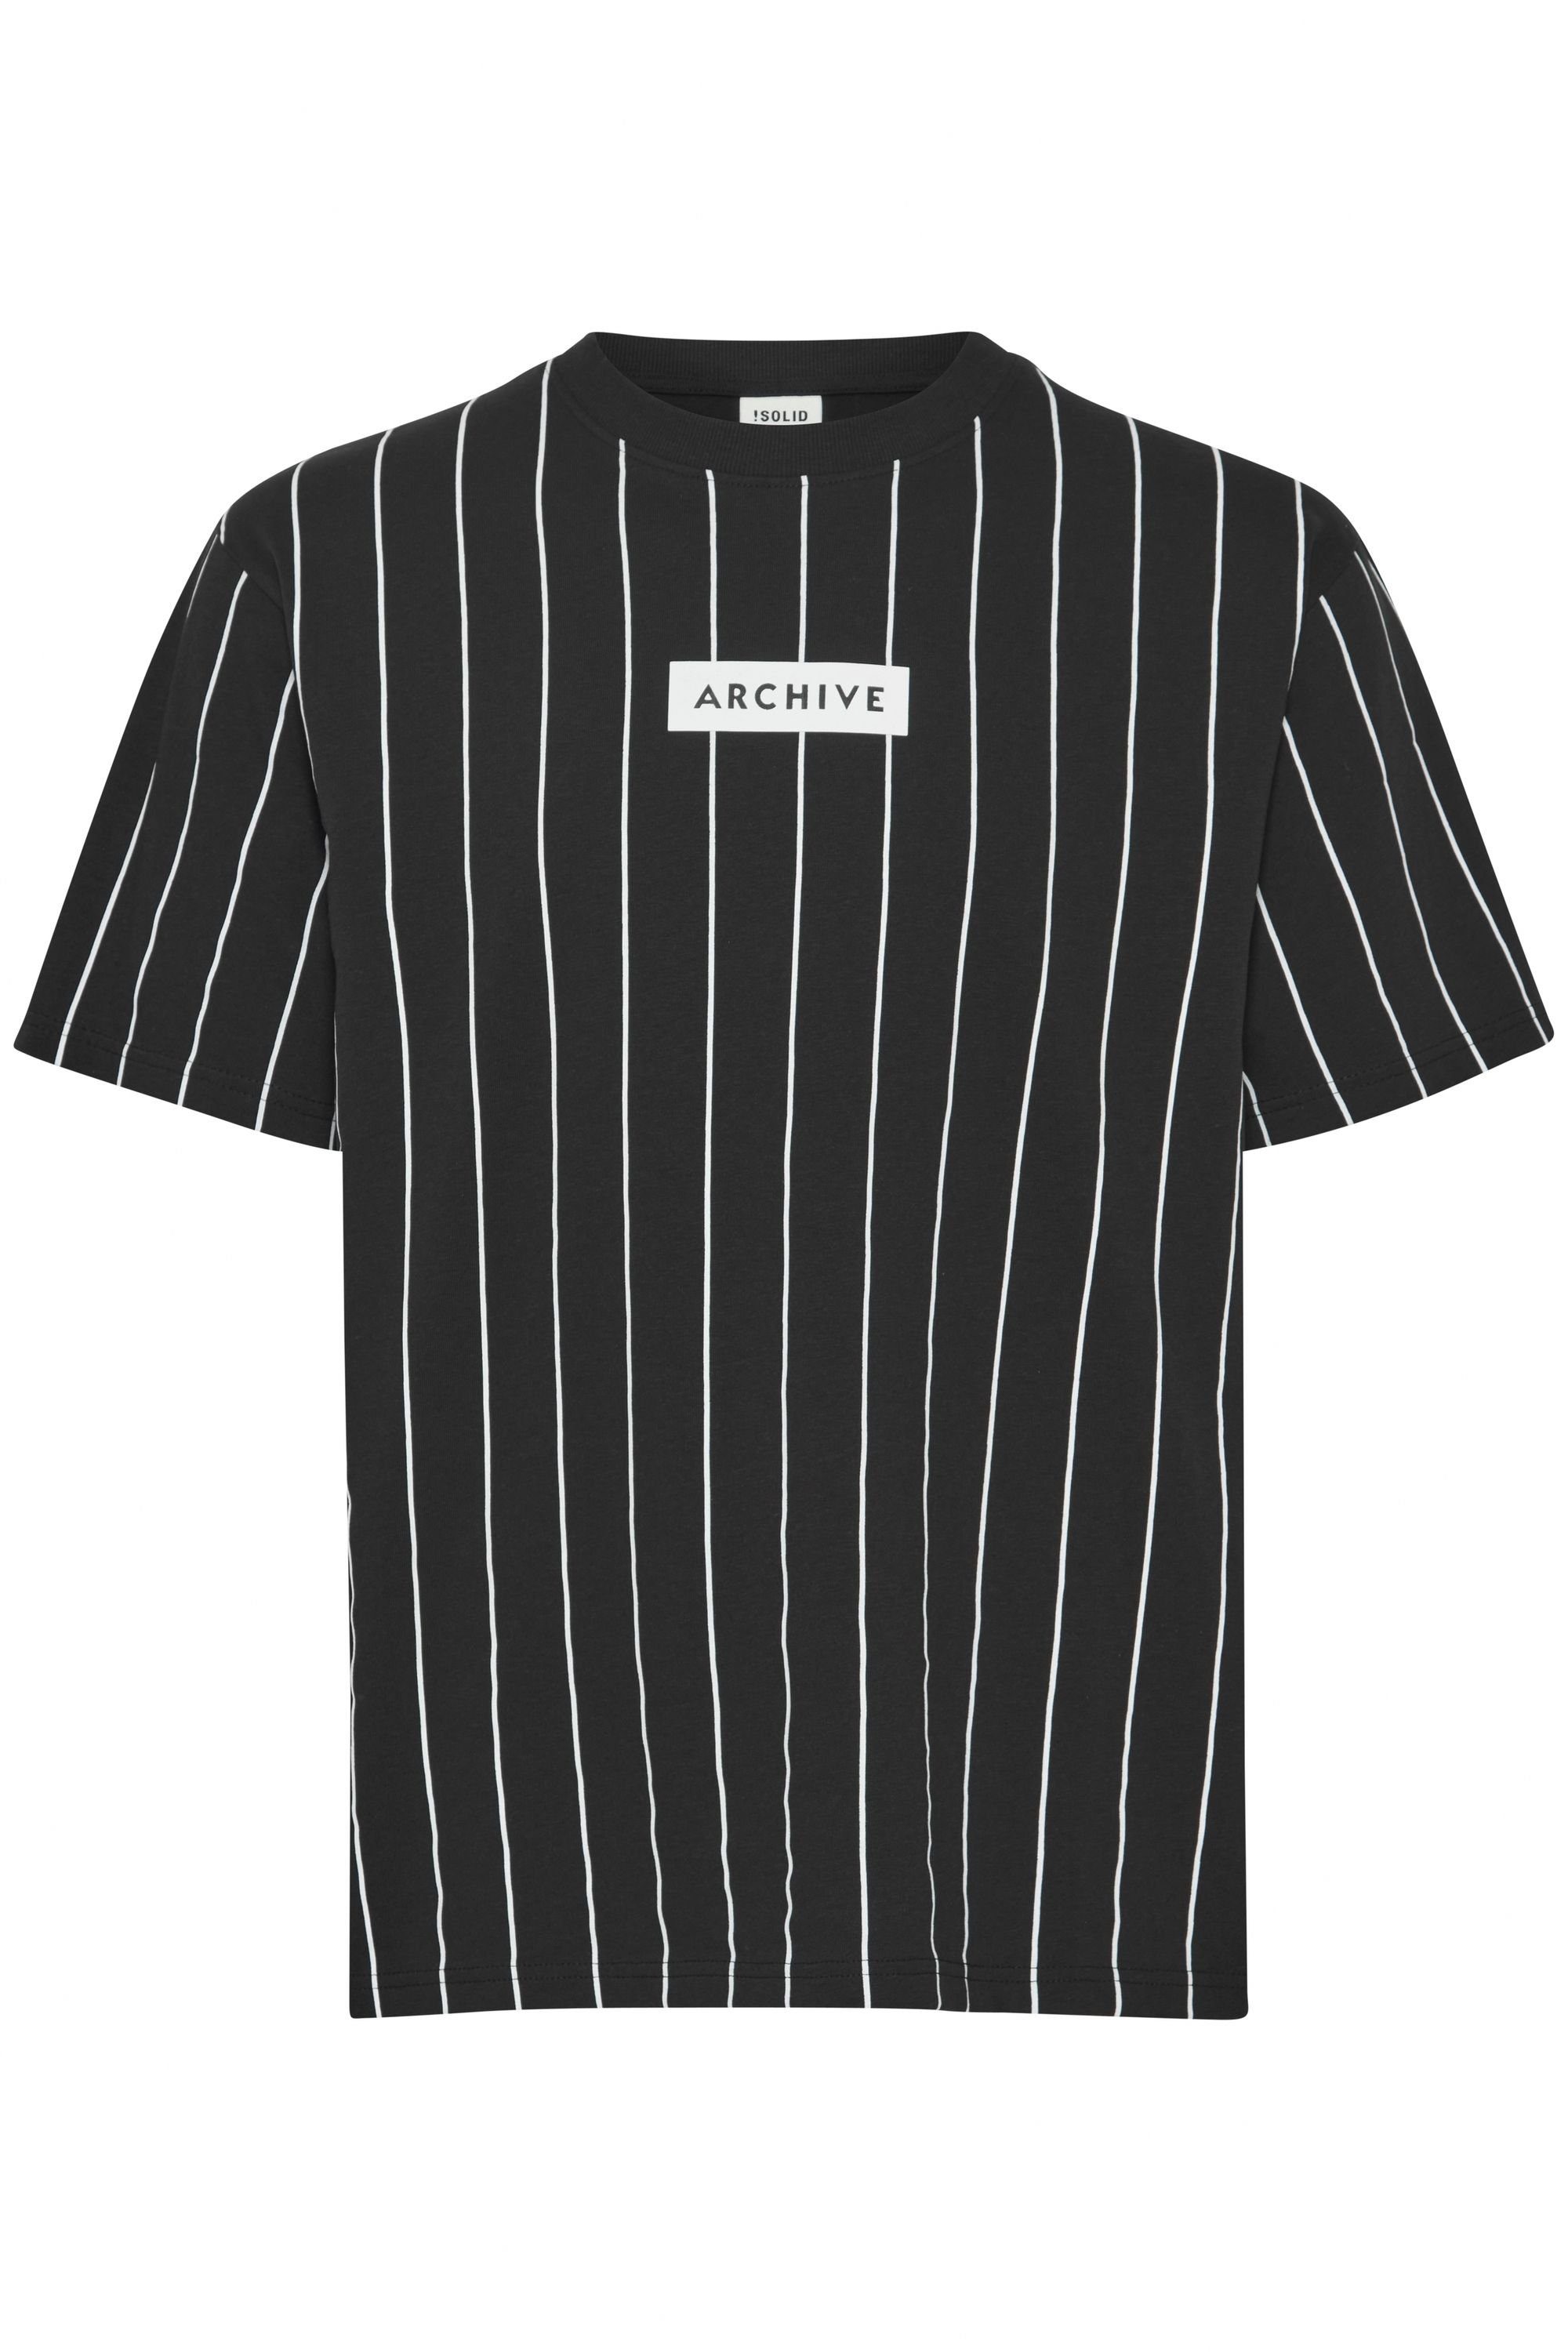 !Solid 21301027-ME True T-Shirt Black - (194008) SDEastman